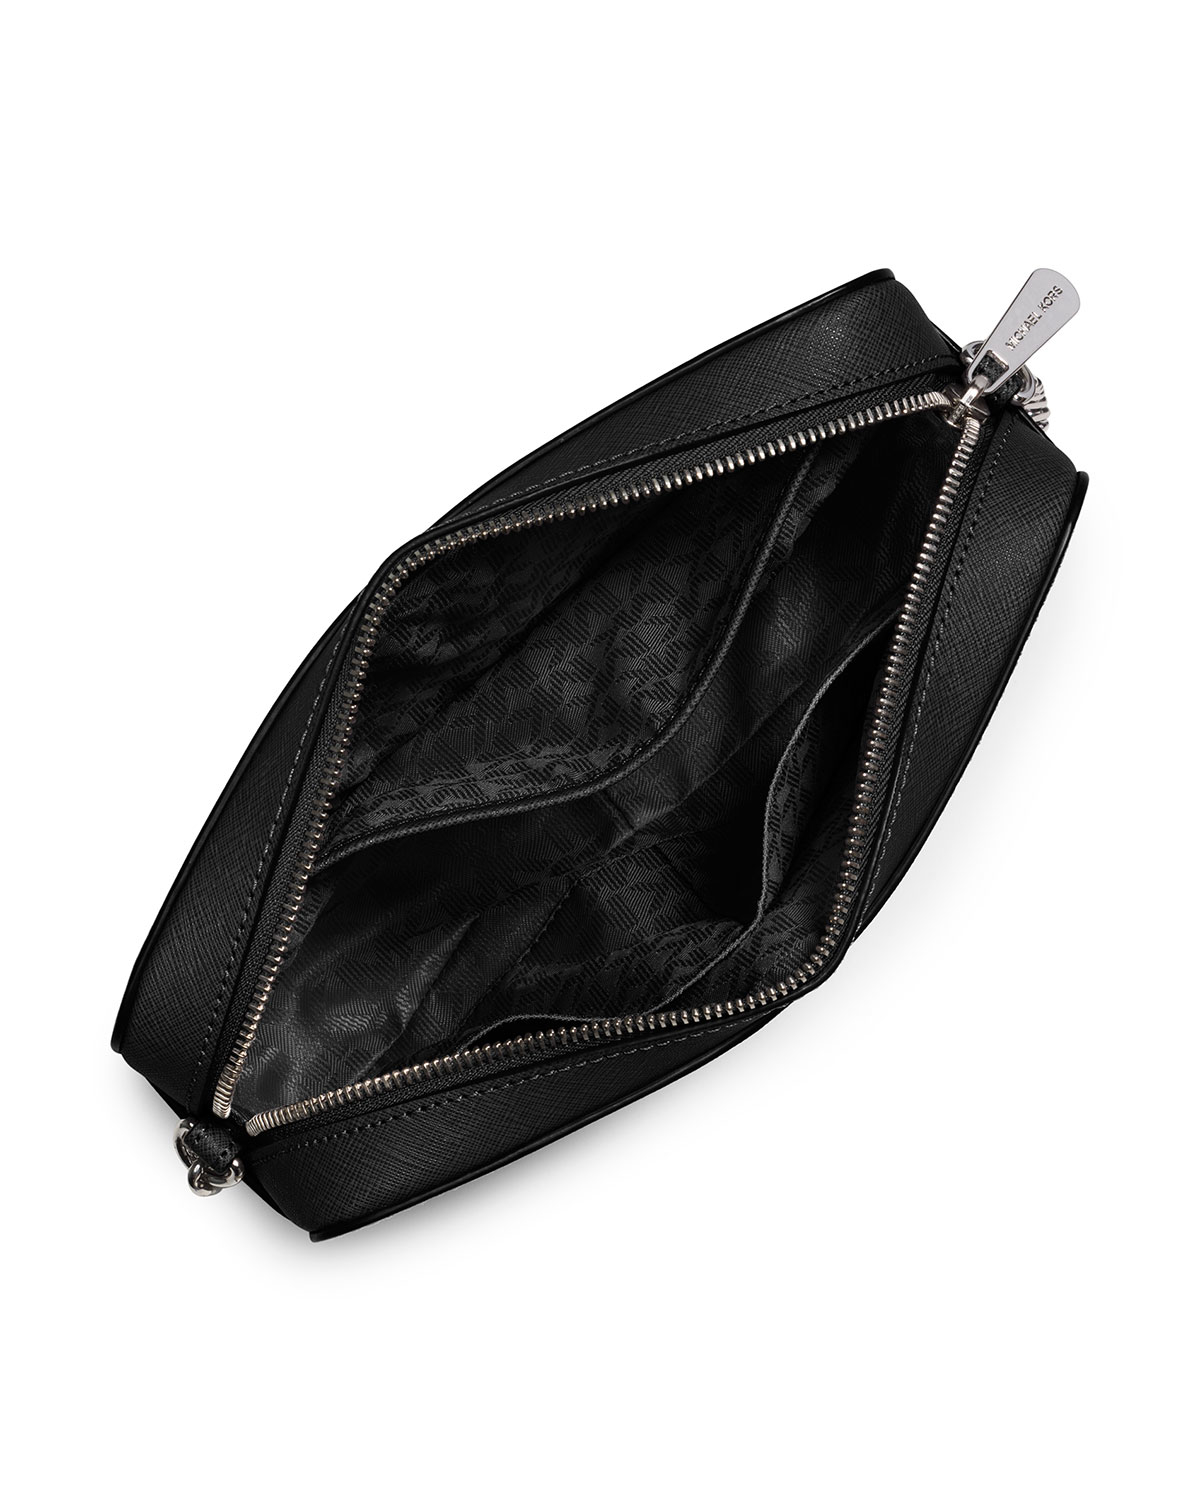 MICHAEL Michael Kors Jet Set Travel Large Leather Cross-Body Bag in Black - Lyst